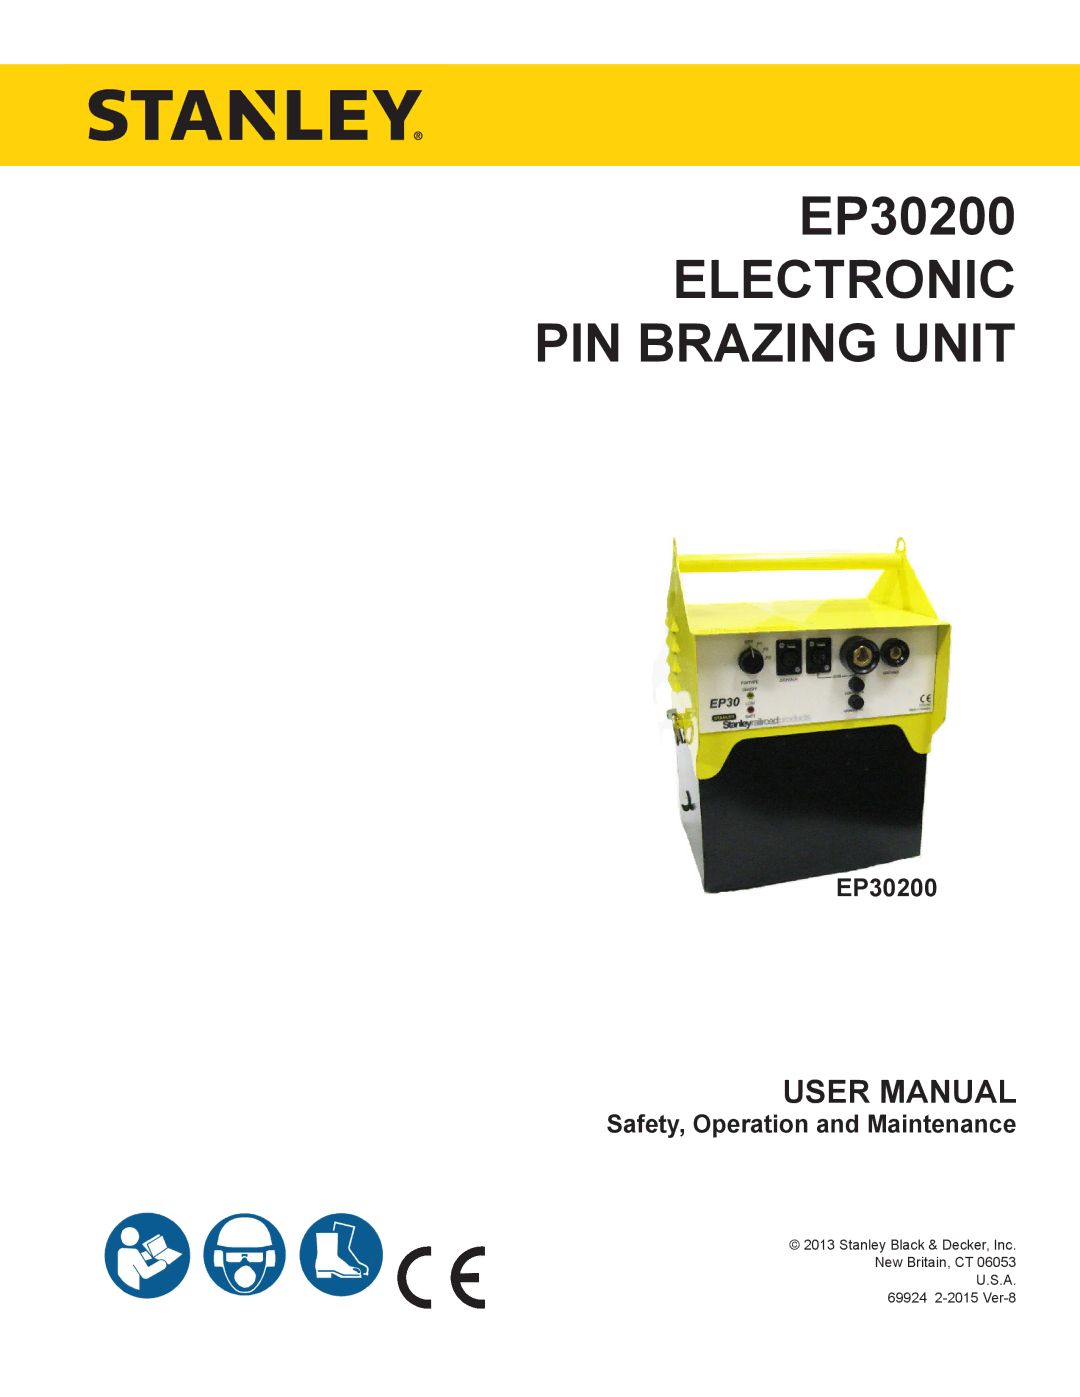 Stanley Black & Decker EP30200 user manual Electronic PIN Brazing Unit 